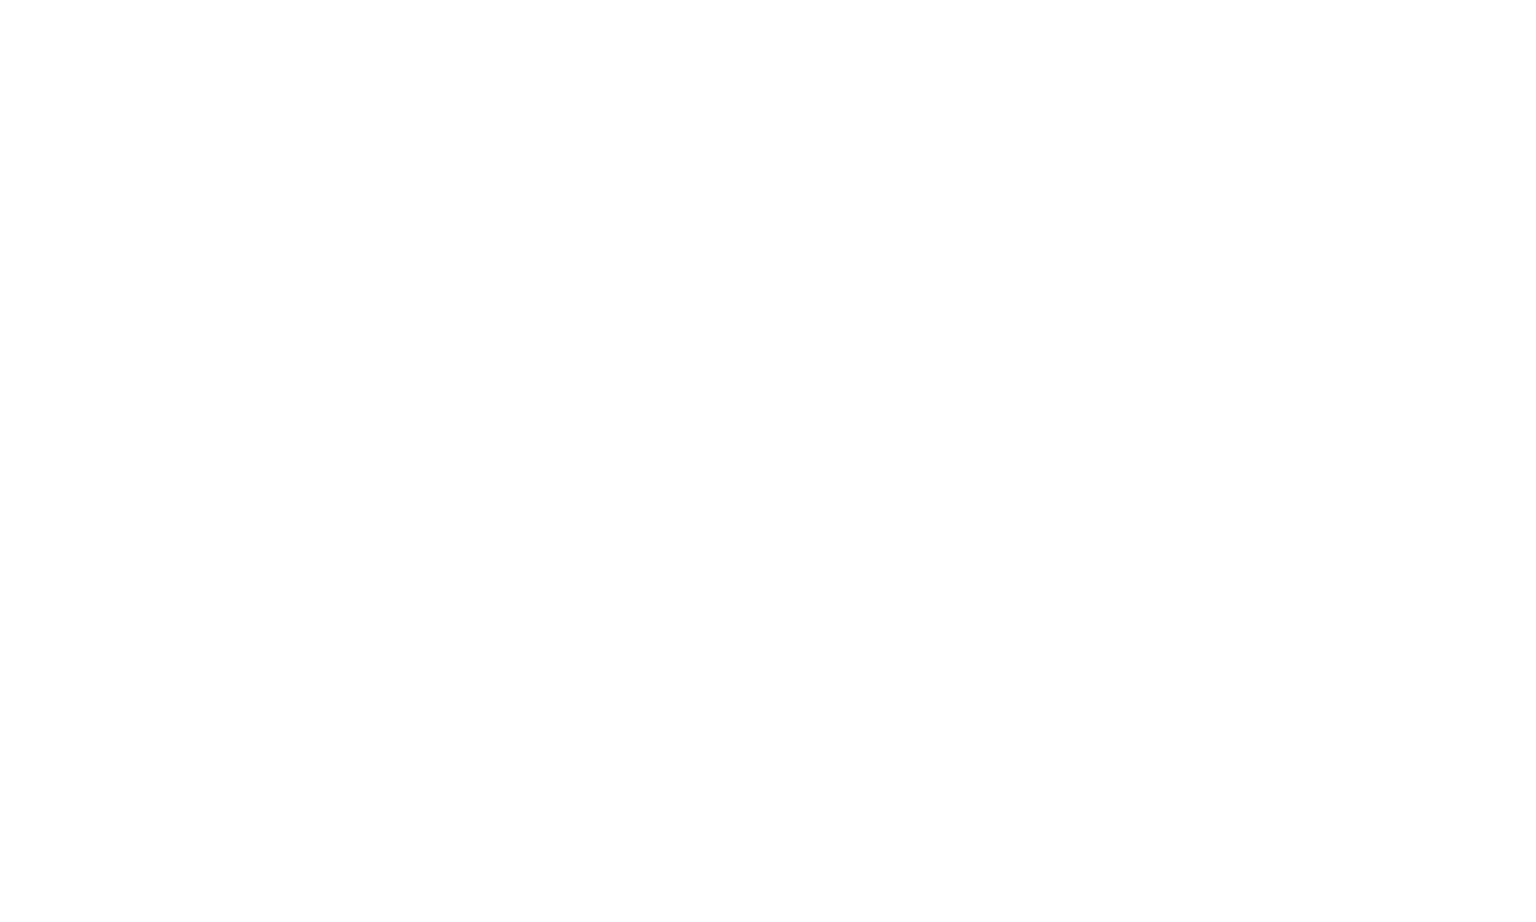 bigger $martPath logo transparent and white